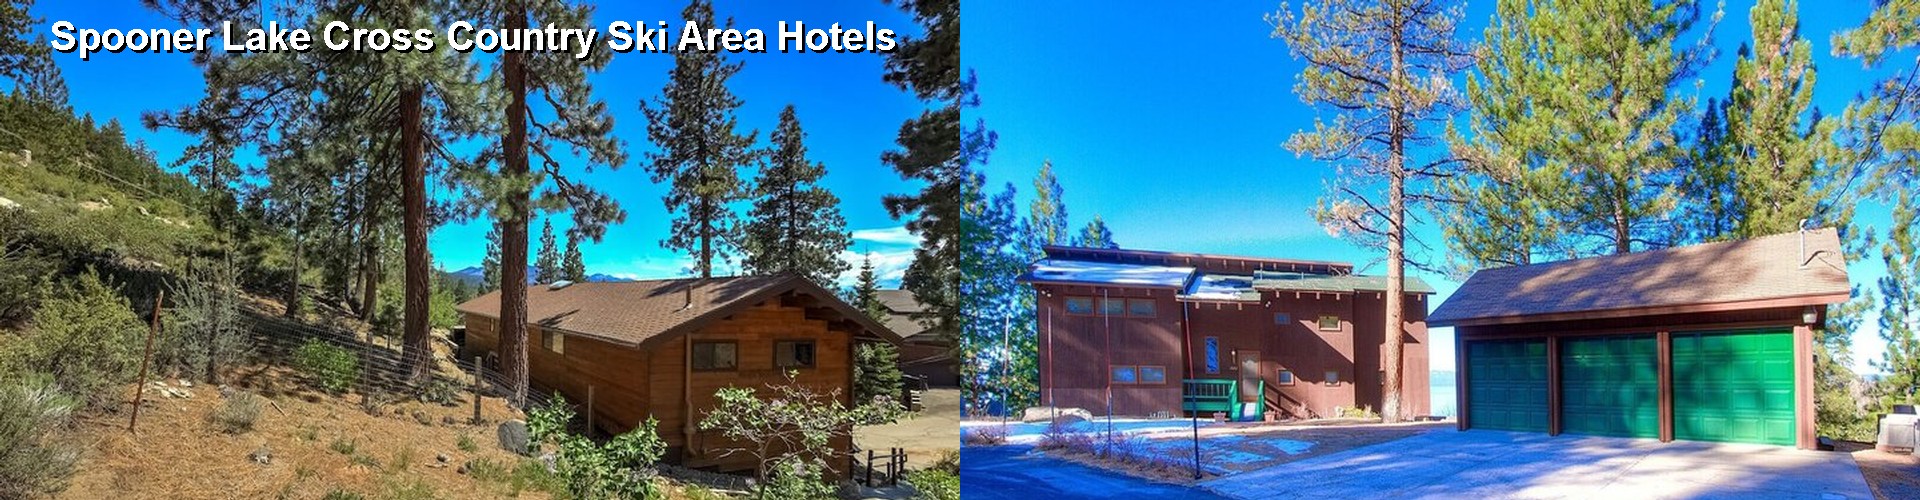 4 Best Hotels near Spooner Lake Cross Country Ski Area